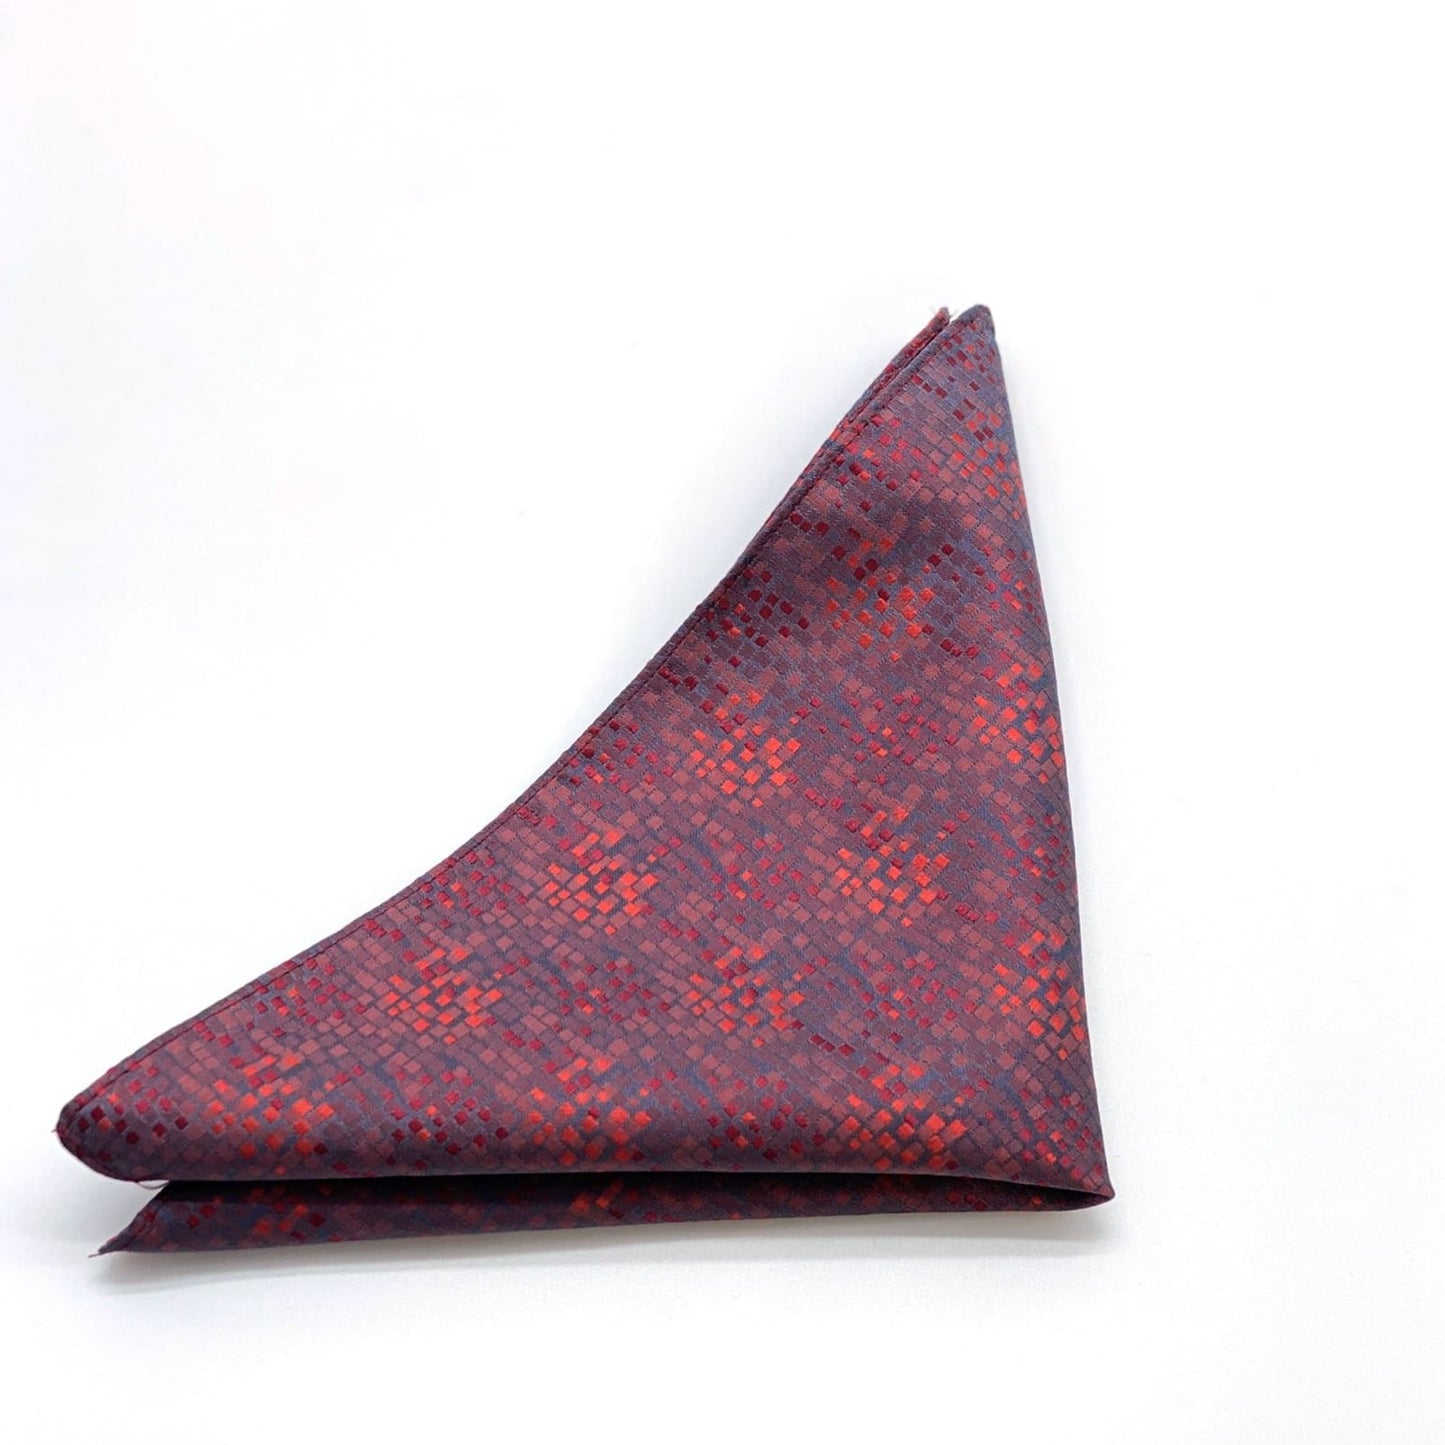 BERLIN BOW handkerchief - 2081 red - accessories